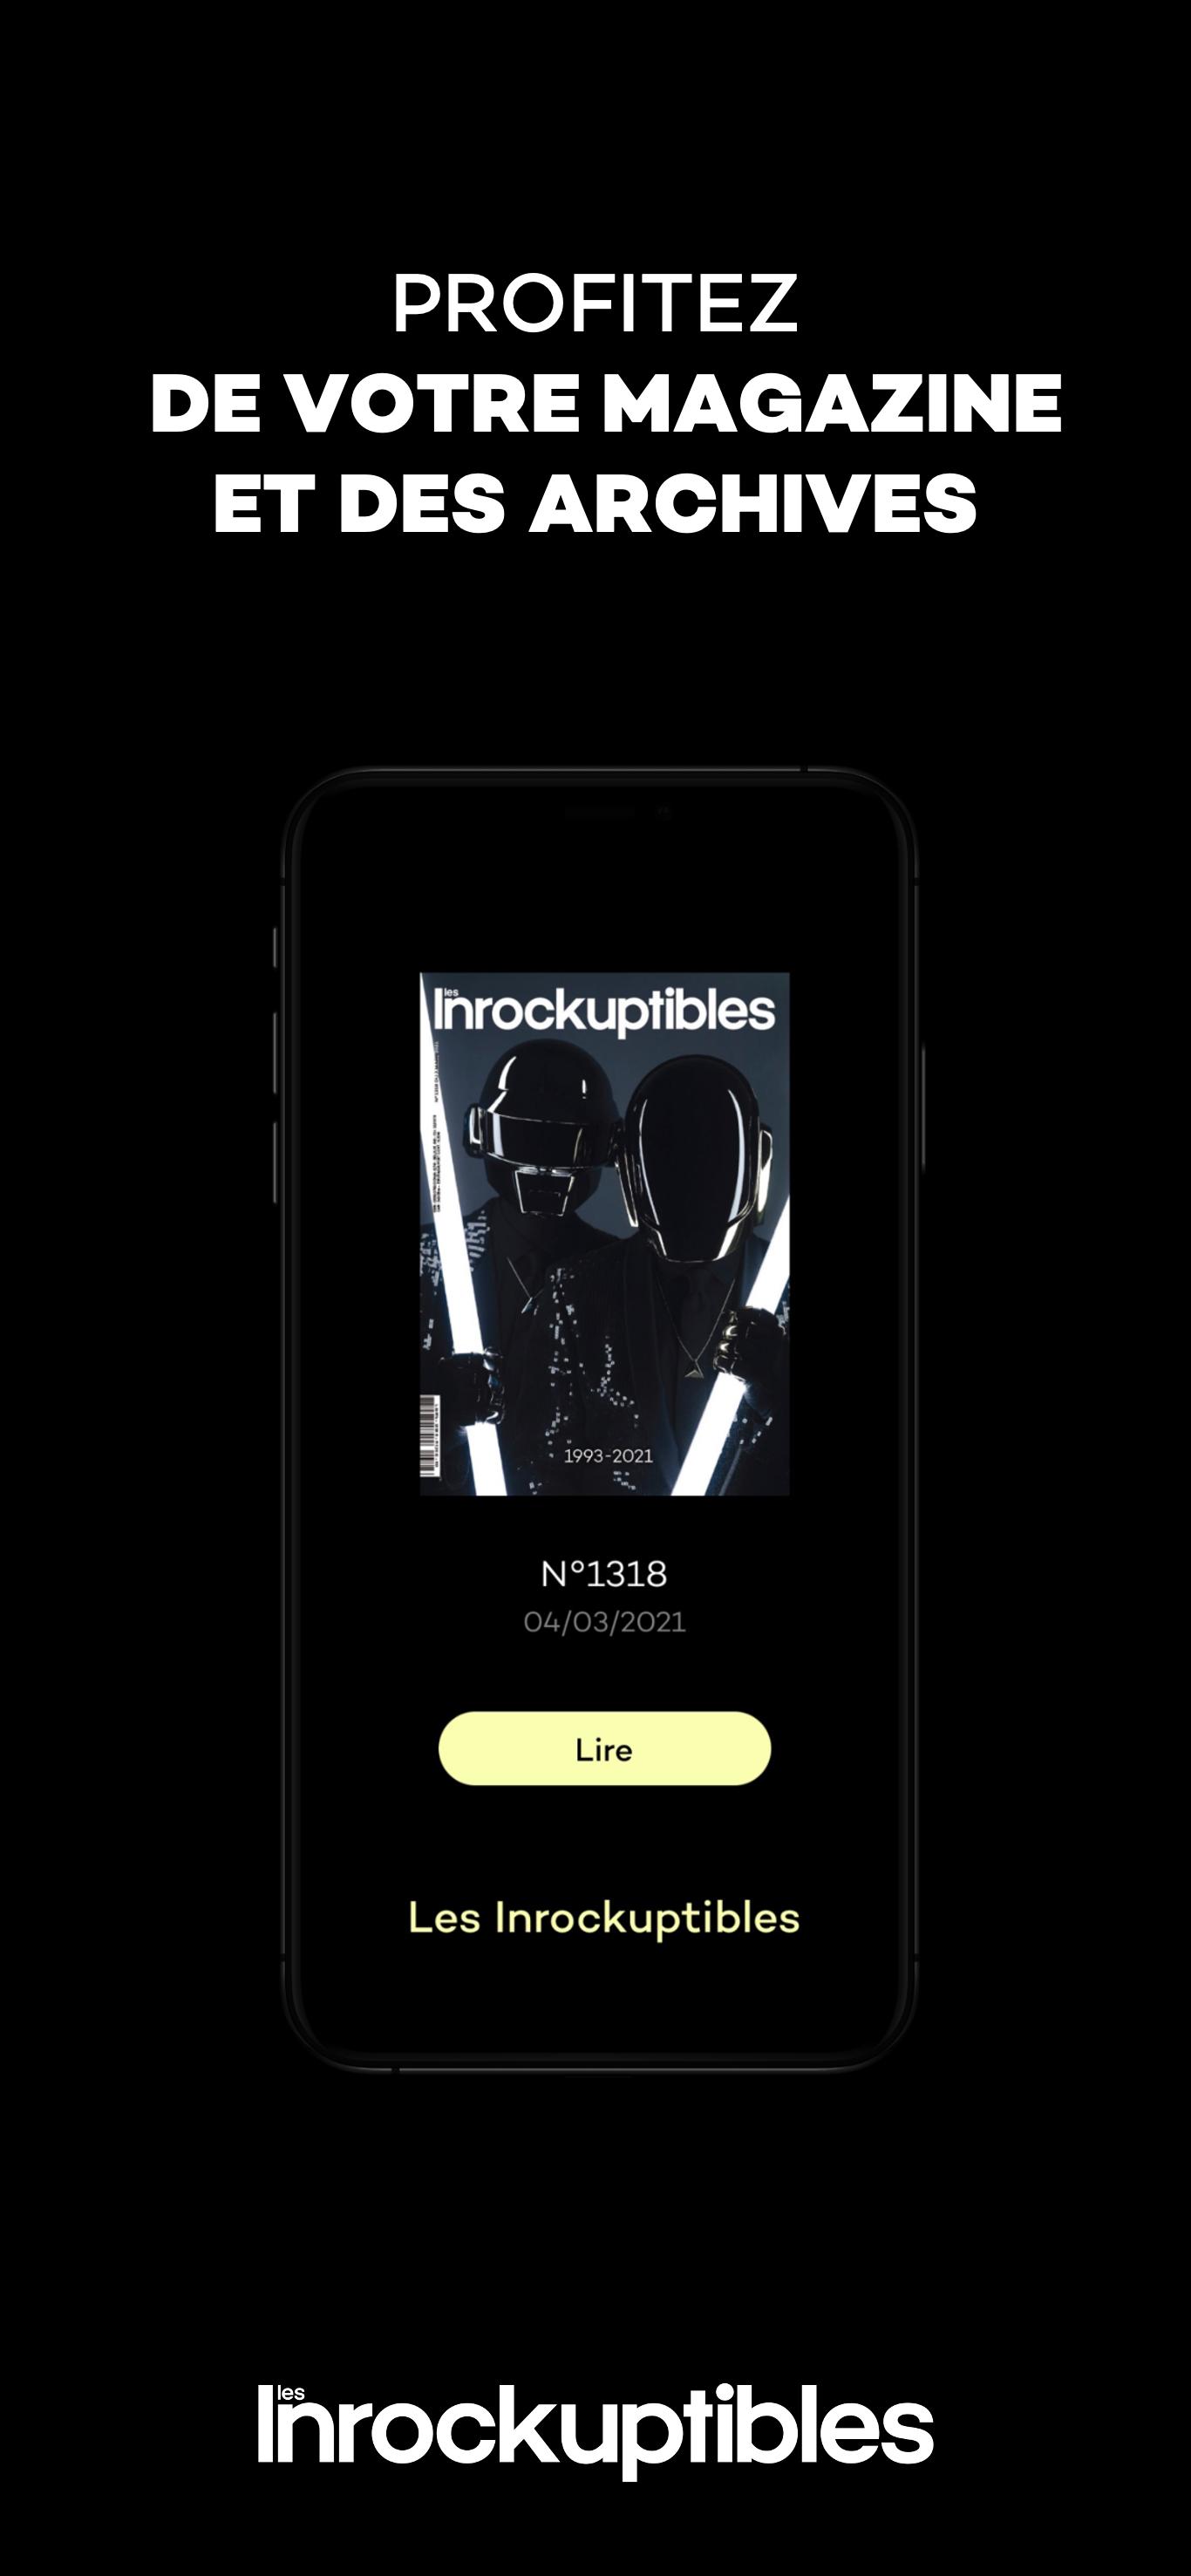 Les Inrockuptibles - playlists, articles et vidéos 6.4.3 Screenshot 14